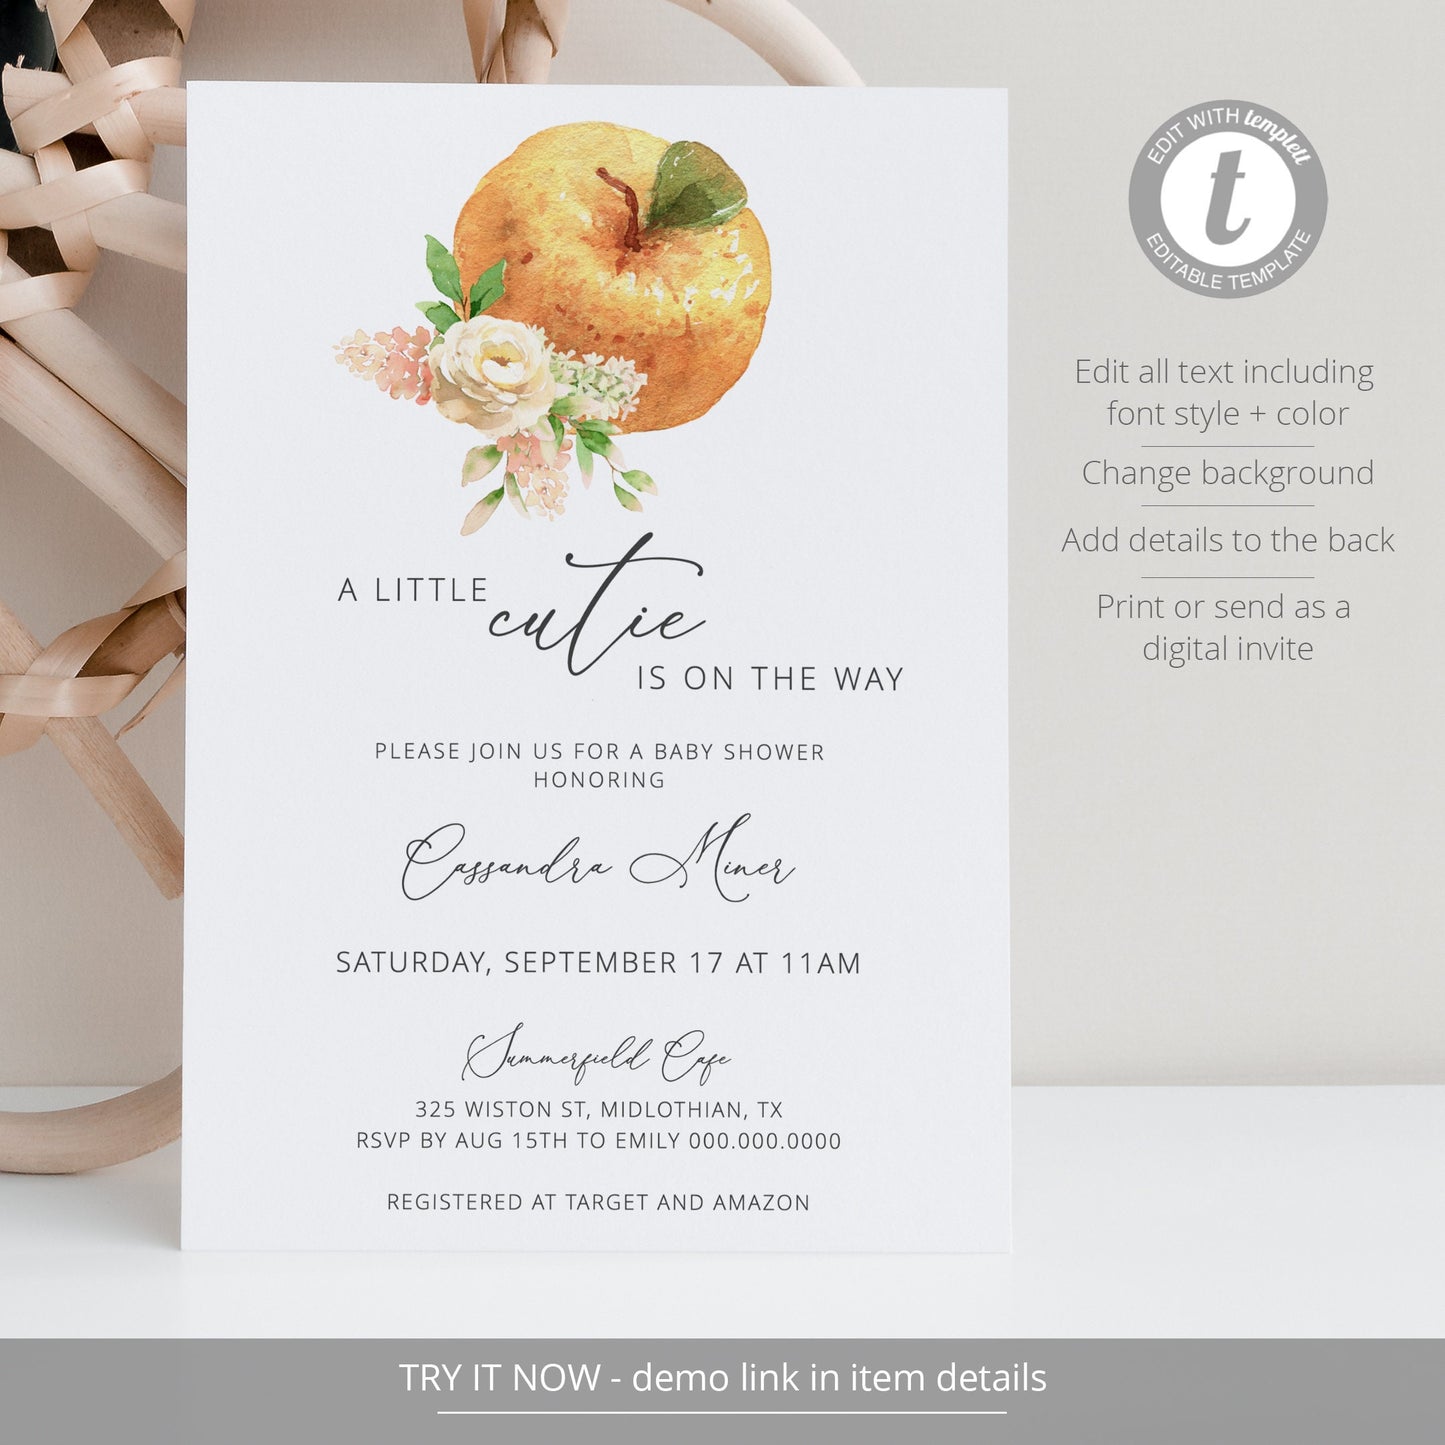 Editable Orange Baby Shower Invitation Set A Little Cutie Baby Shower Invite Floral Citrus Baby Shower Template